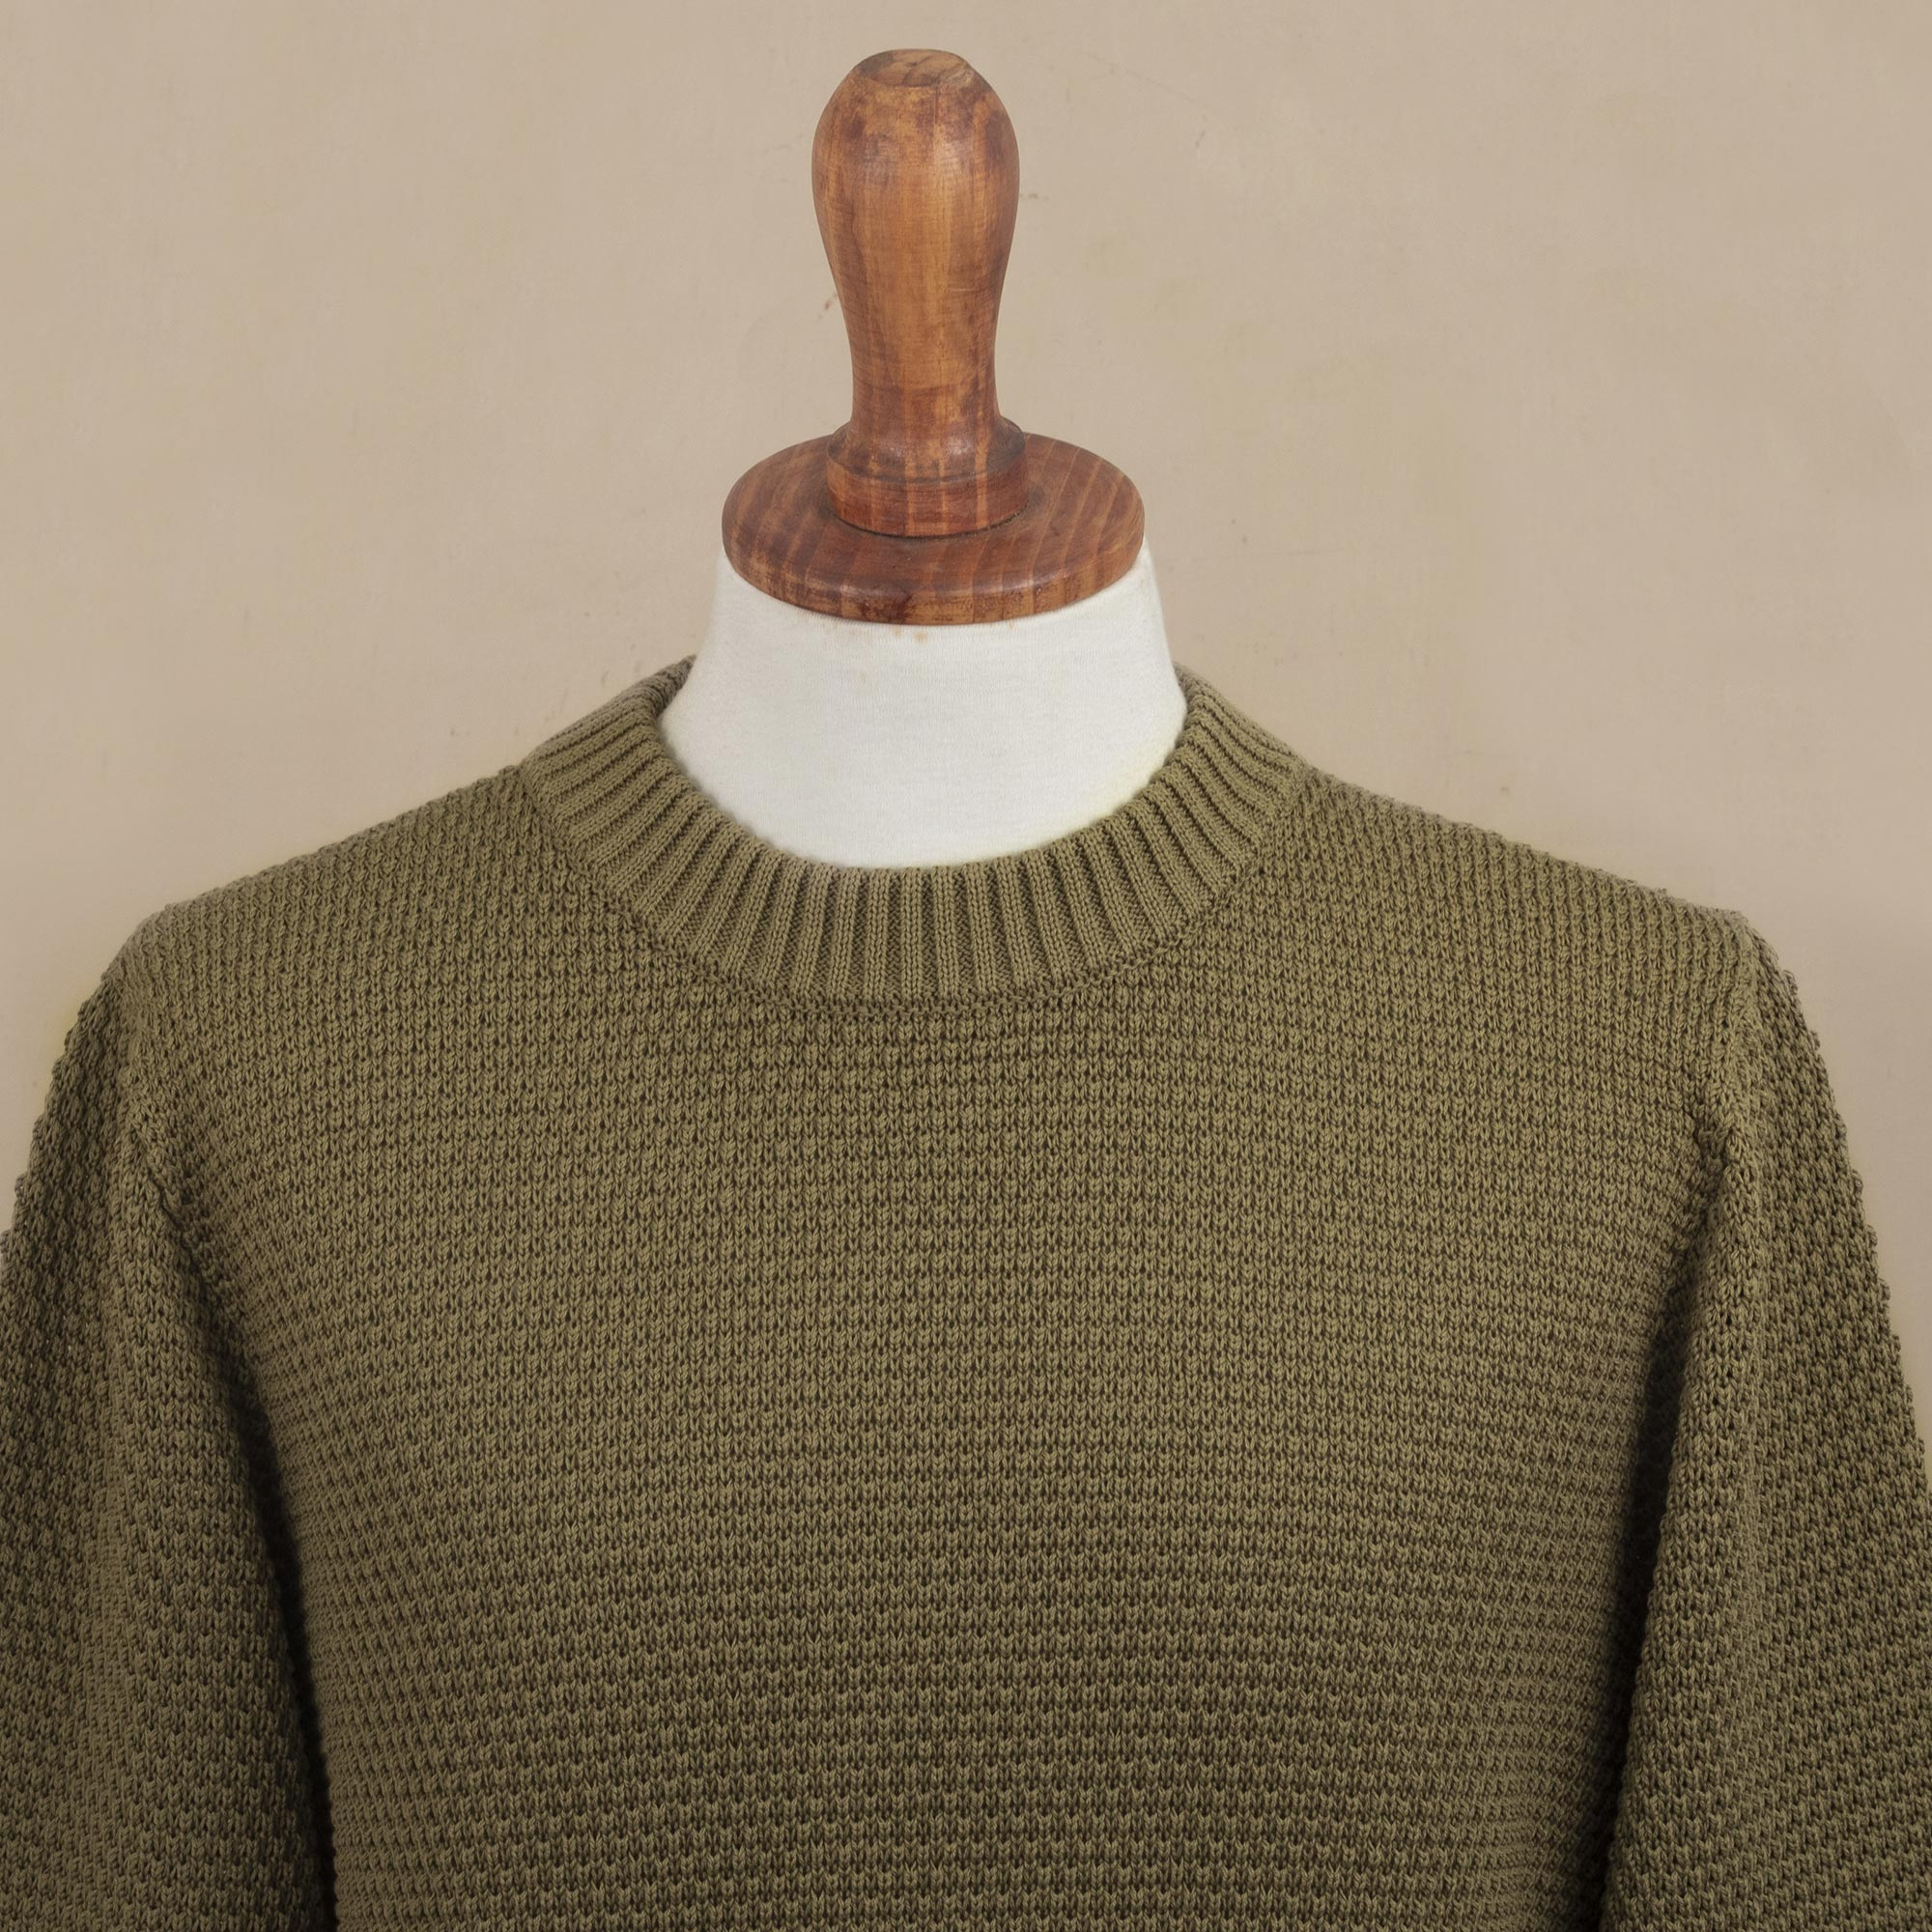 Olive Green Pima Cotton Crew Neck Men's Sweater from Peru - Casual ...